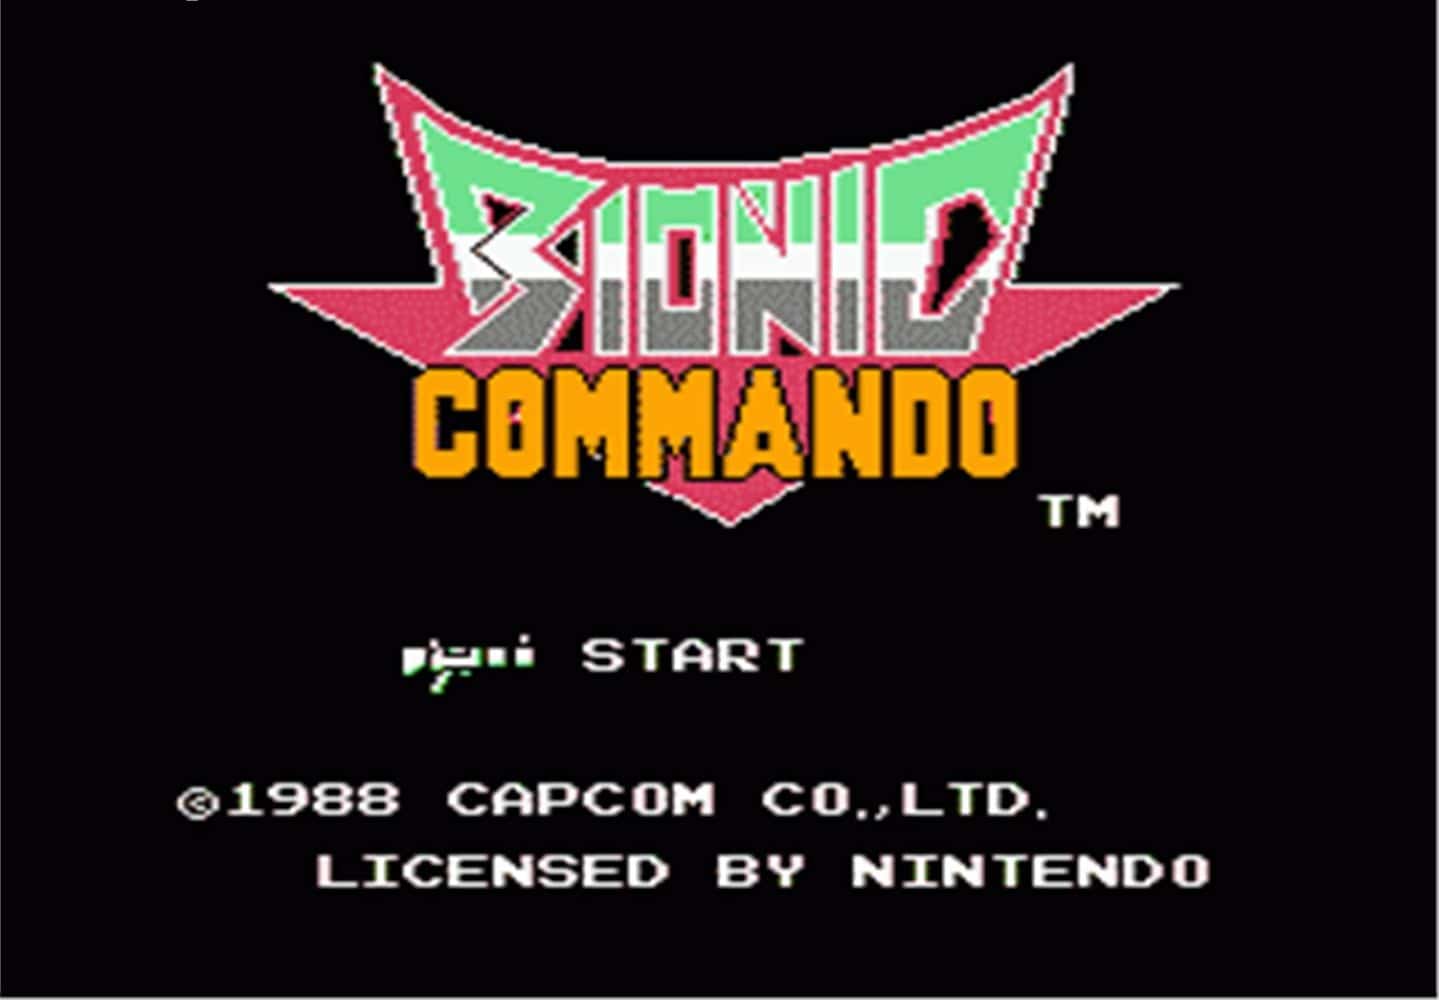 More information about "Bionic Commando Retrospective"